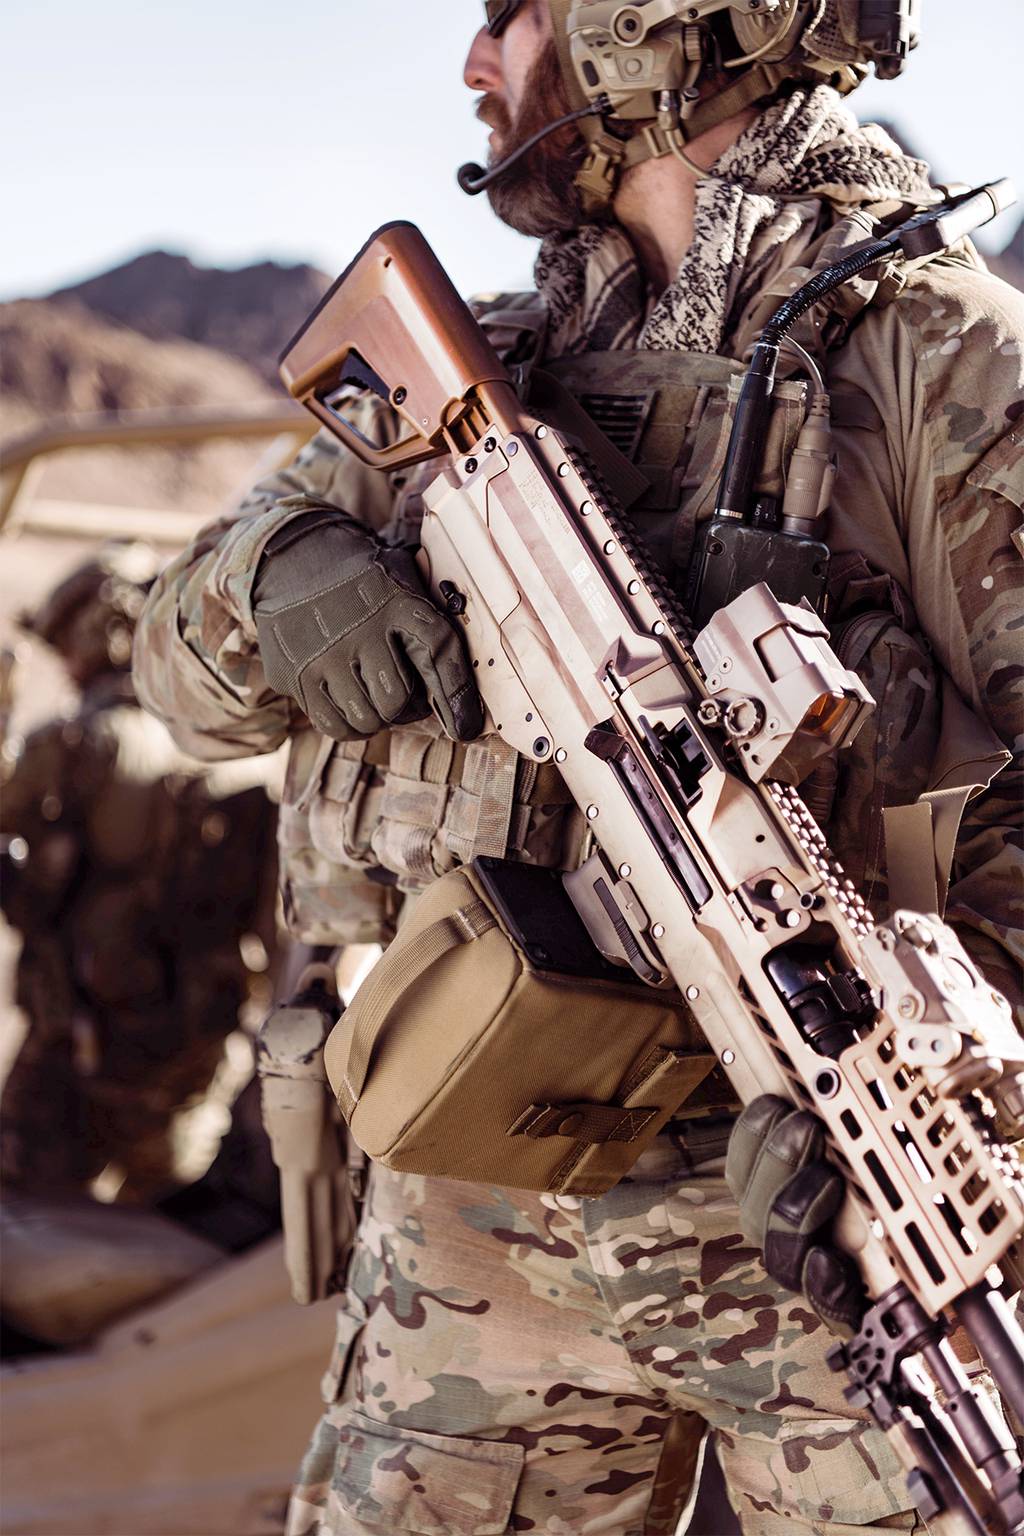 New rifle, light machine gun headed to combat troops